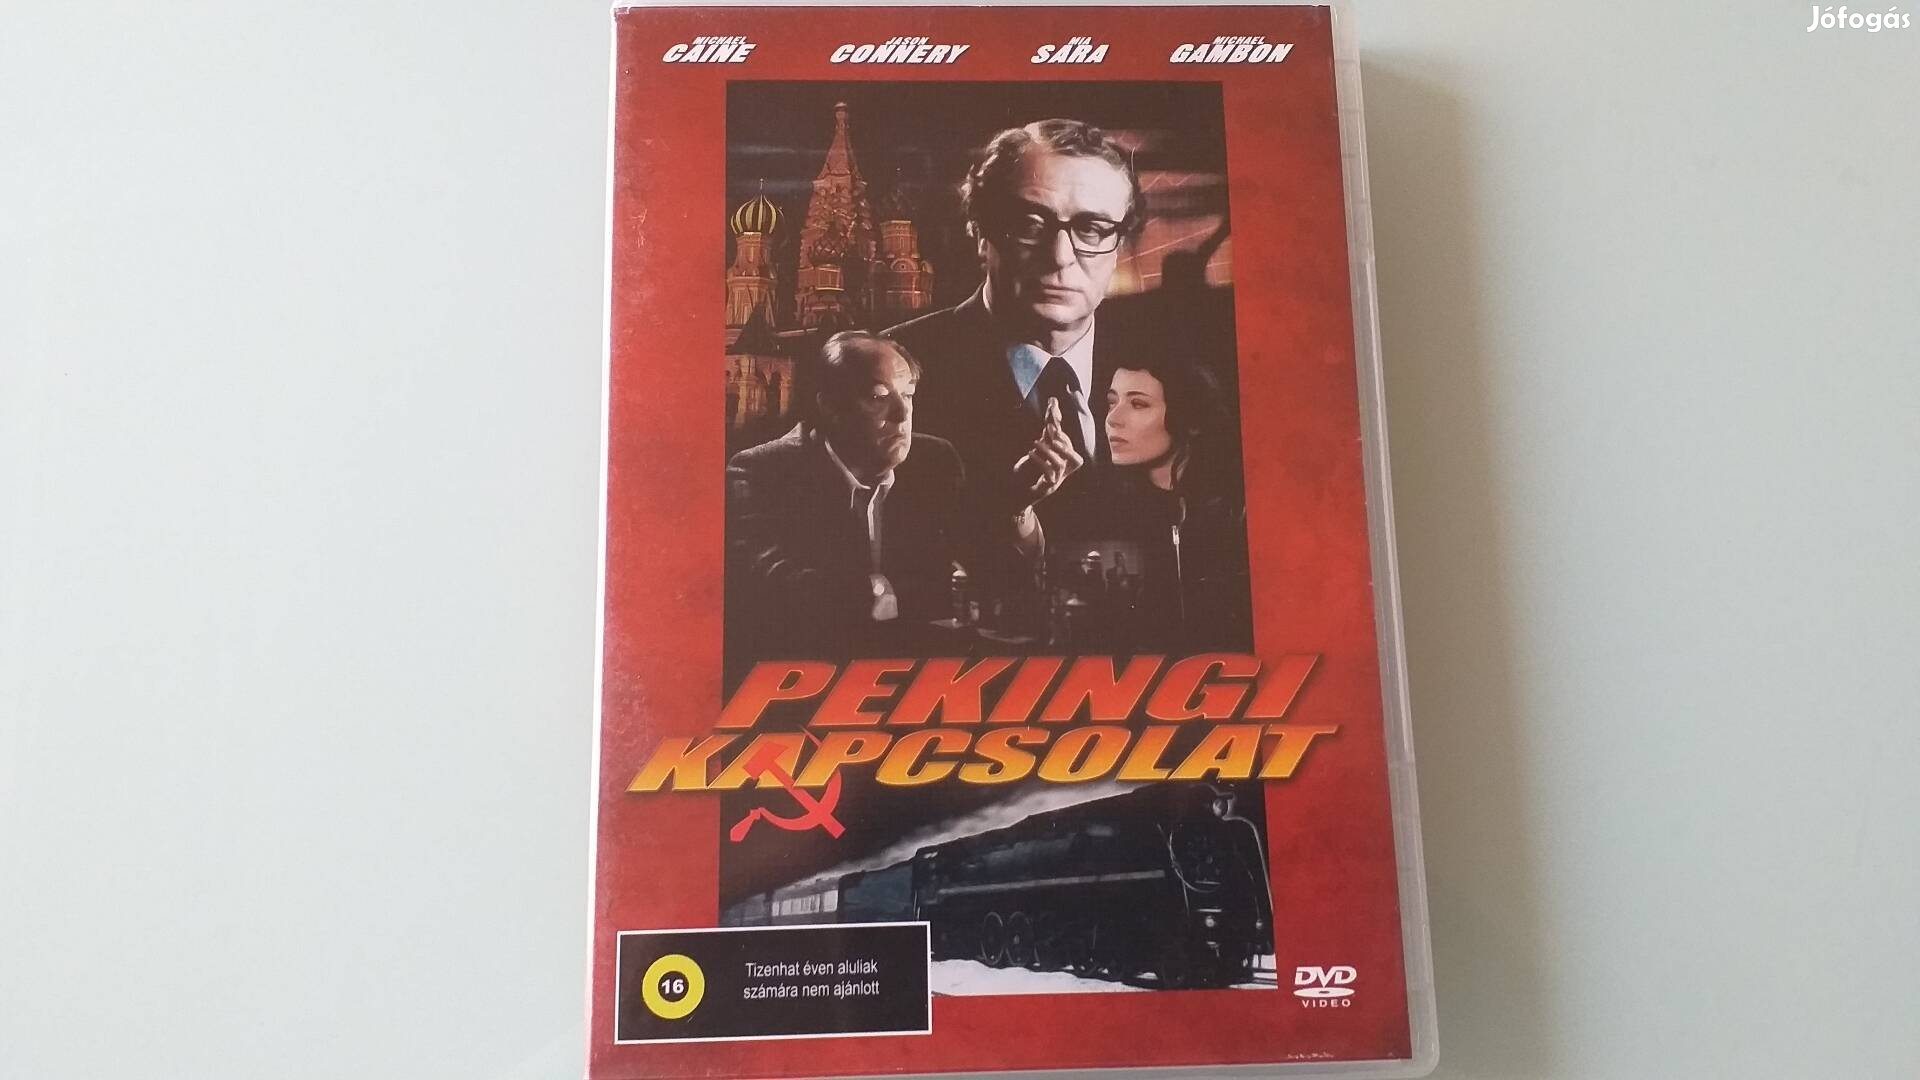 Pekingi kapcsolat akció/thriller DVD -Michael Caine